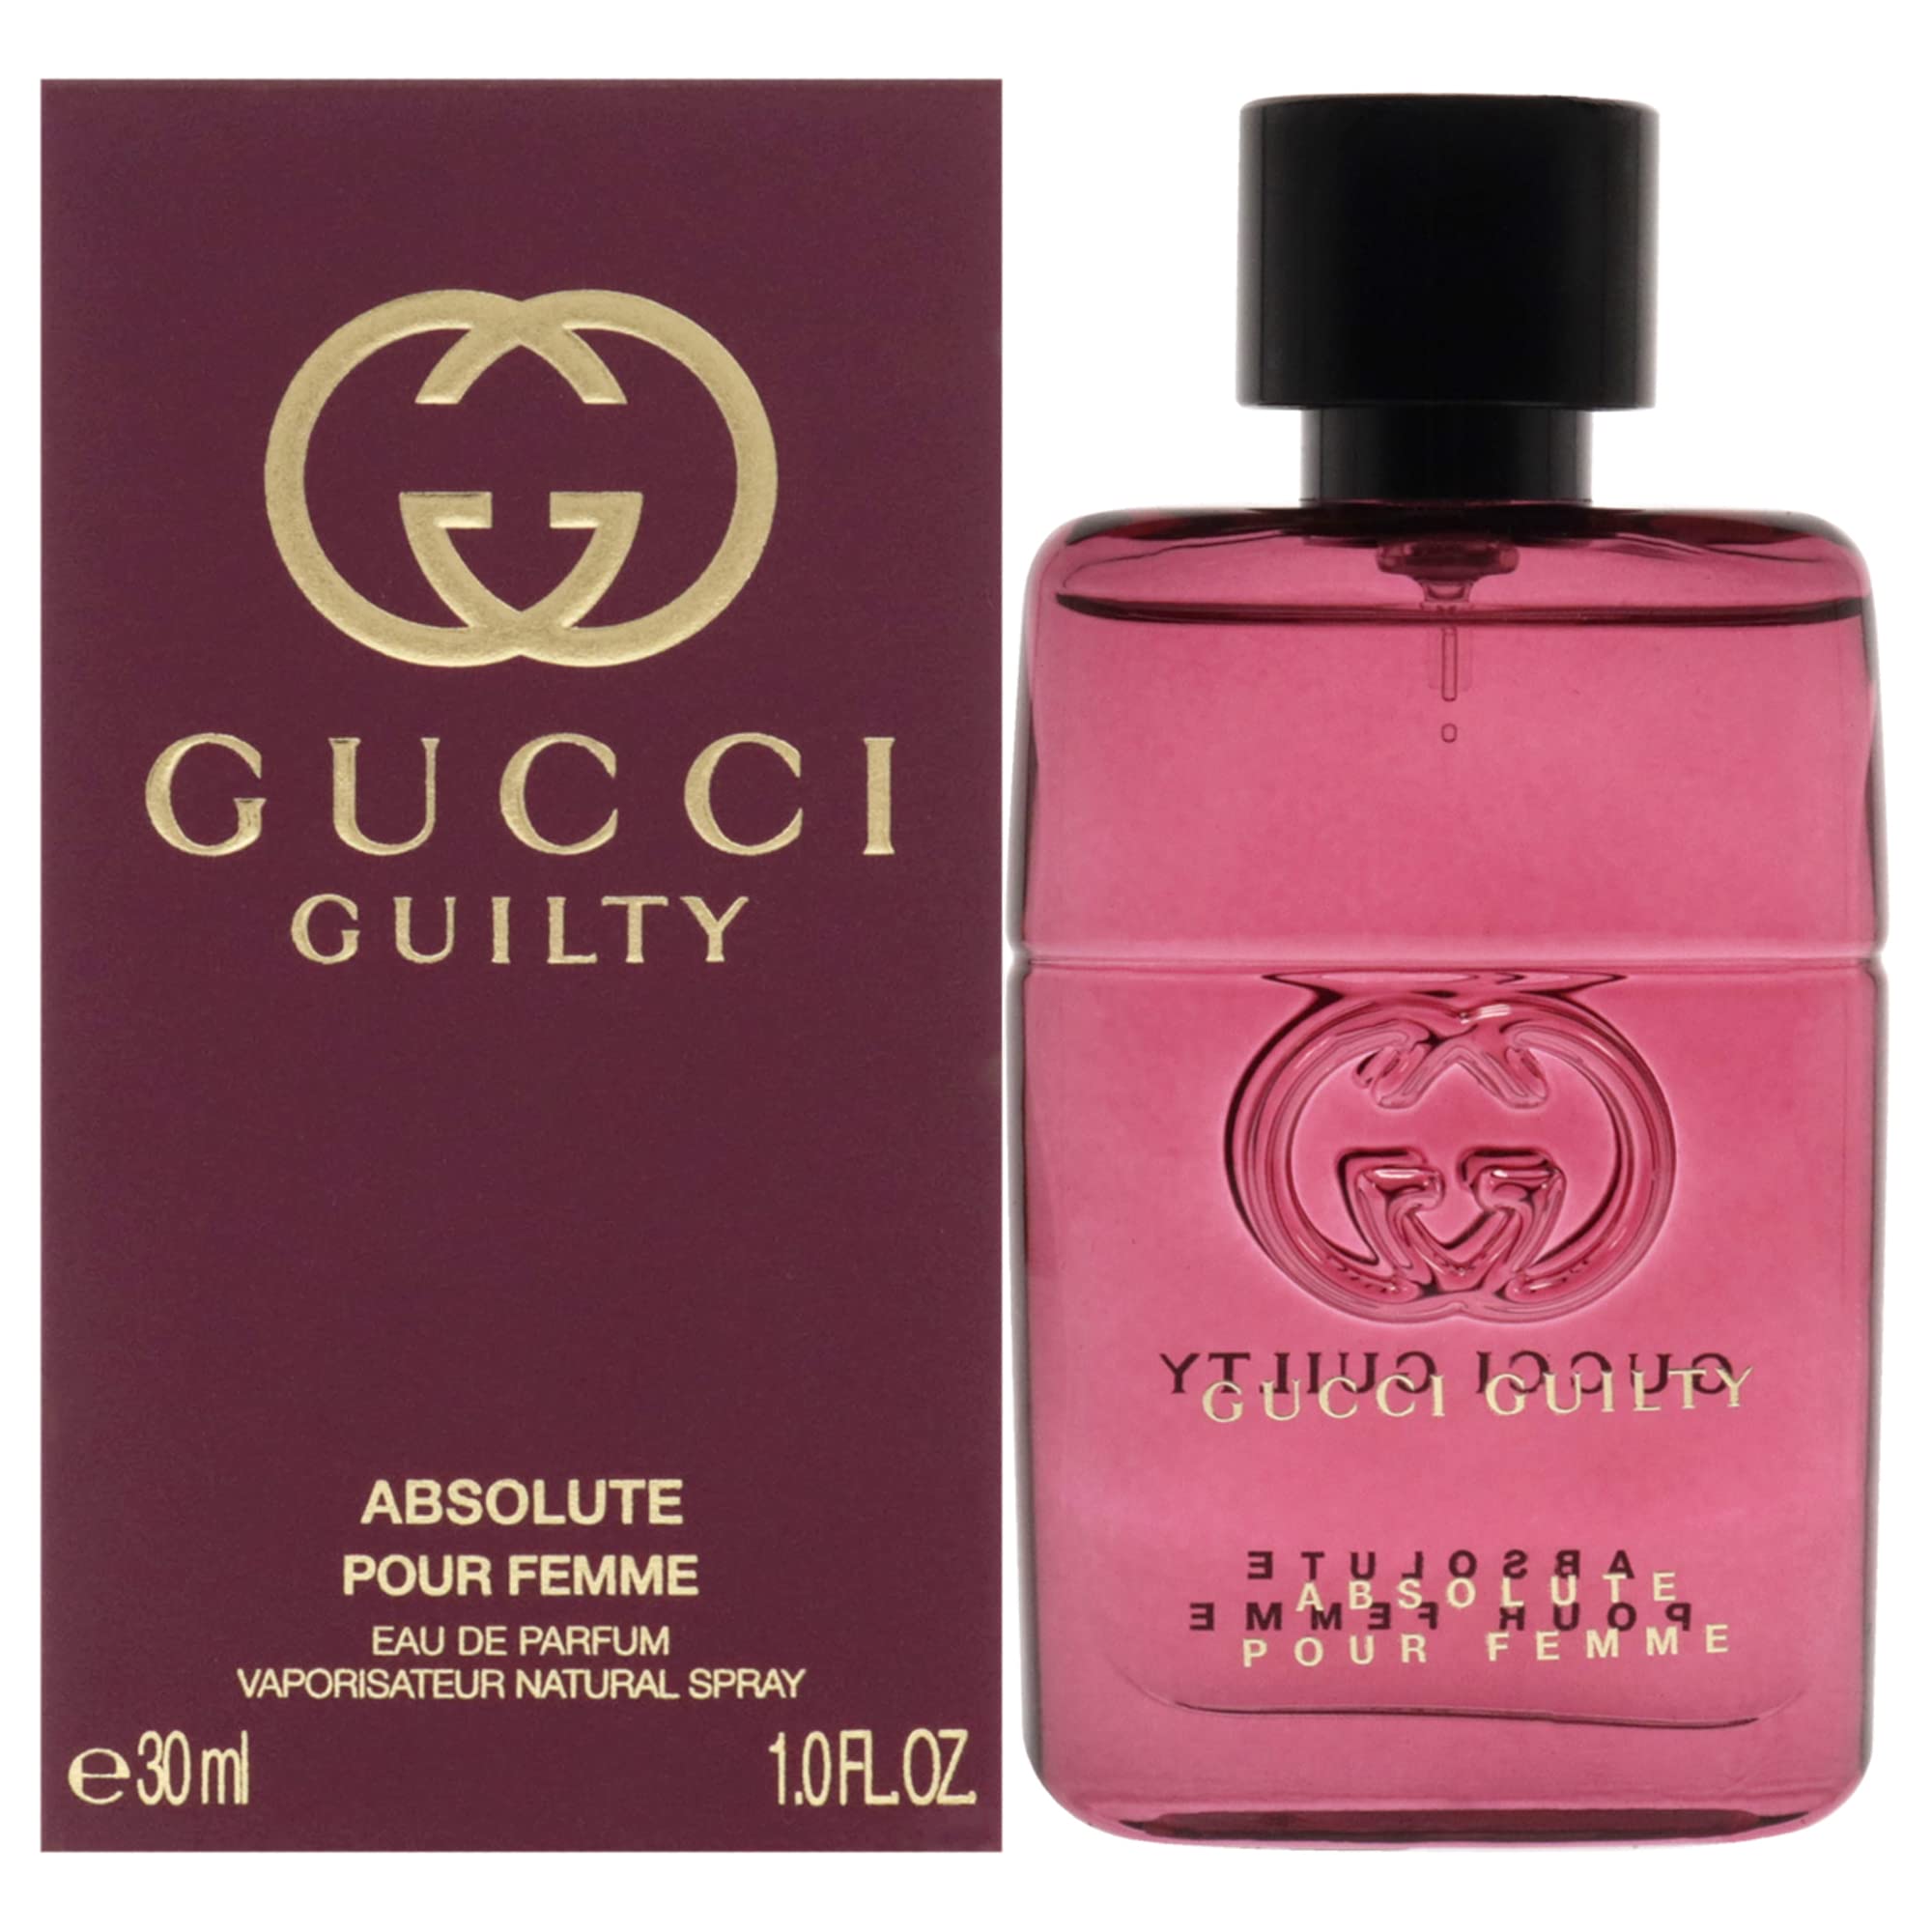 Gucci Guilty Absolute Pour Femme, 30 ml